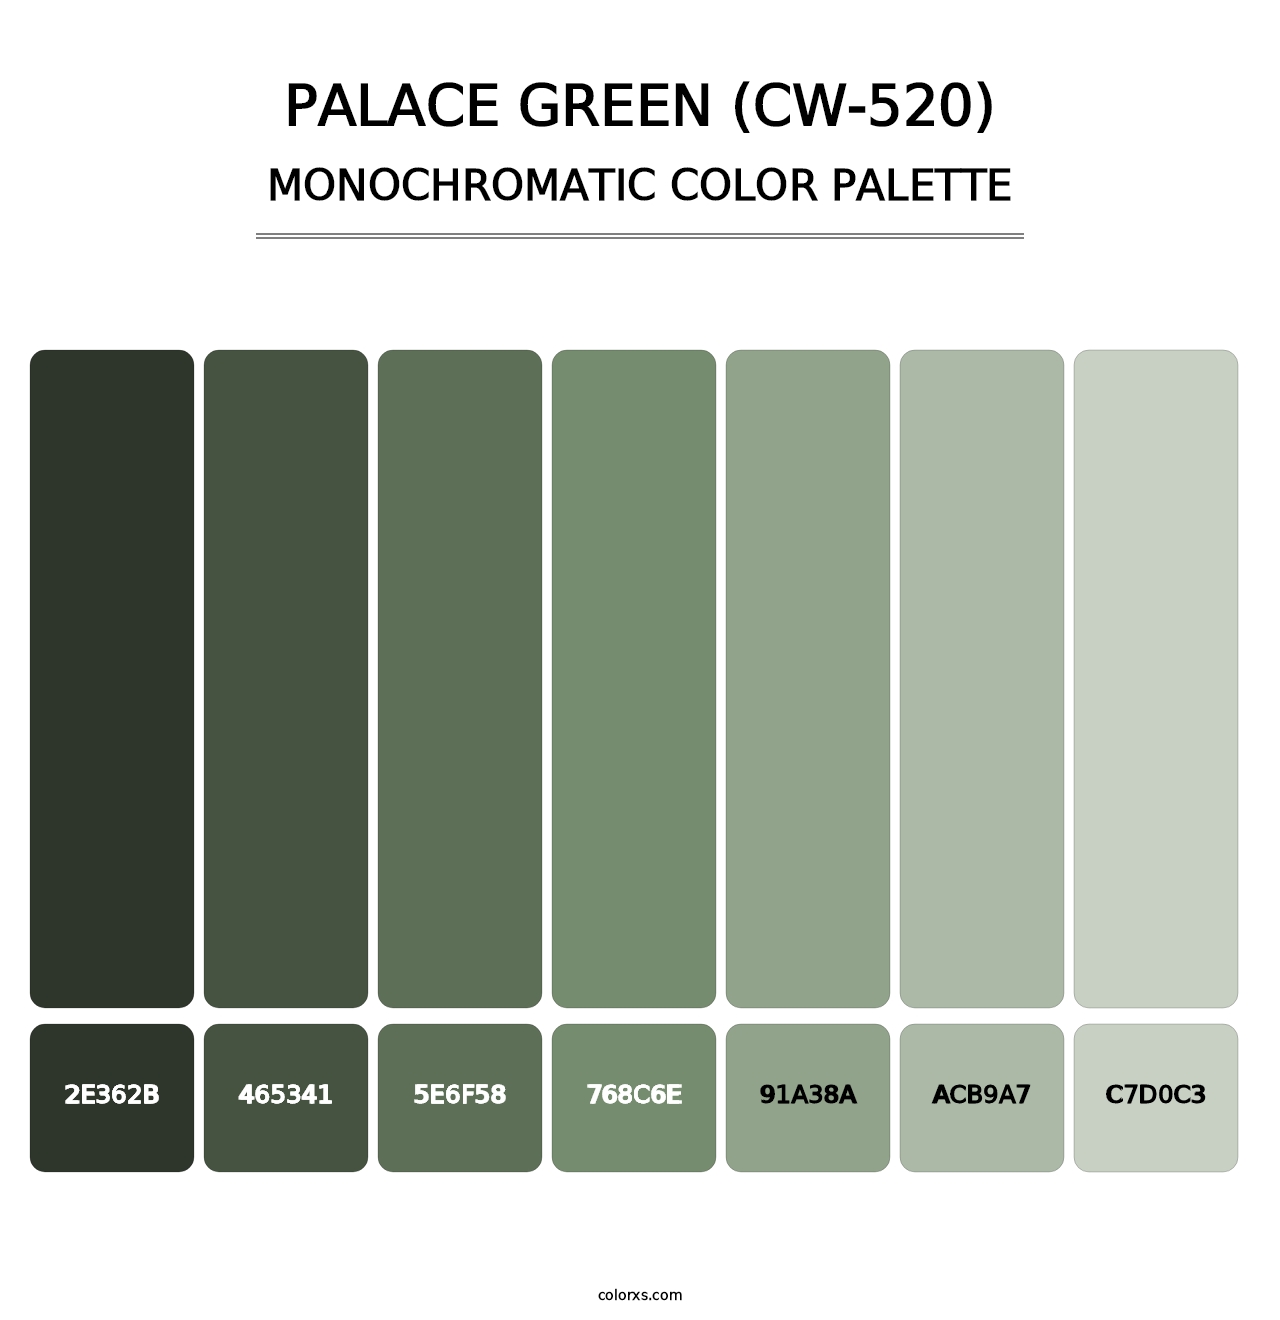 Palace Green (CW-520) - Monochromatic Color Palette